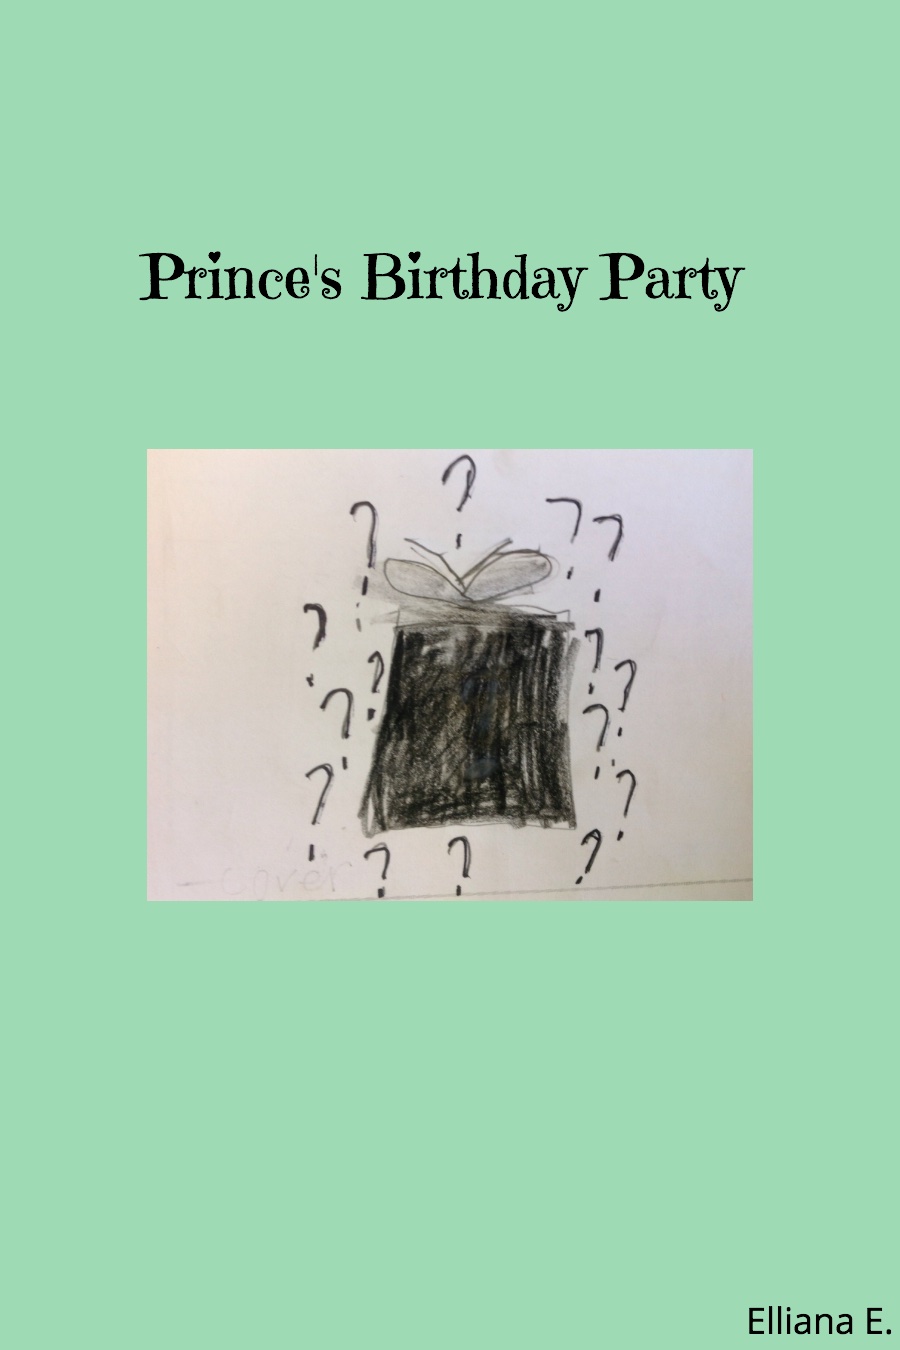 Prince’s Birthday Party by Elliana E